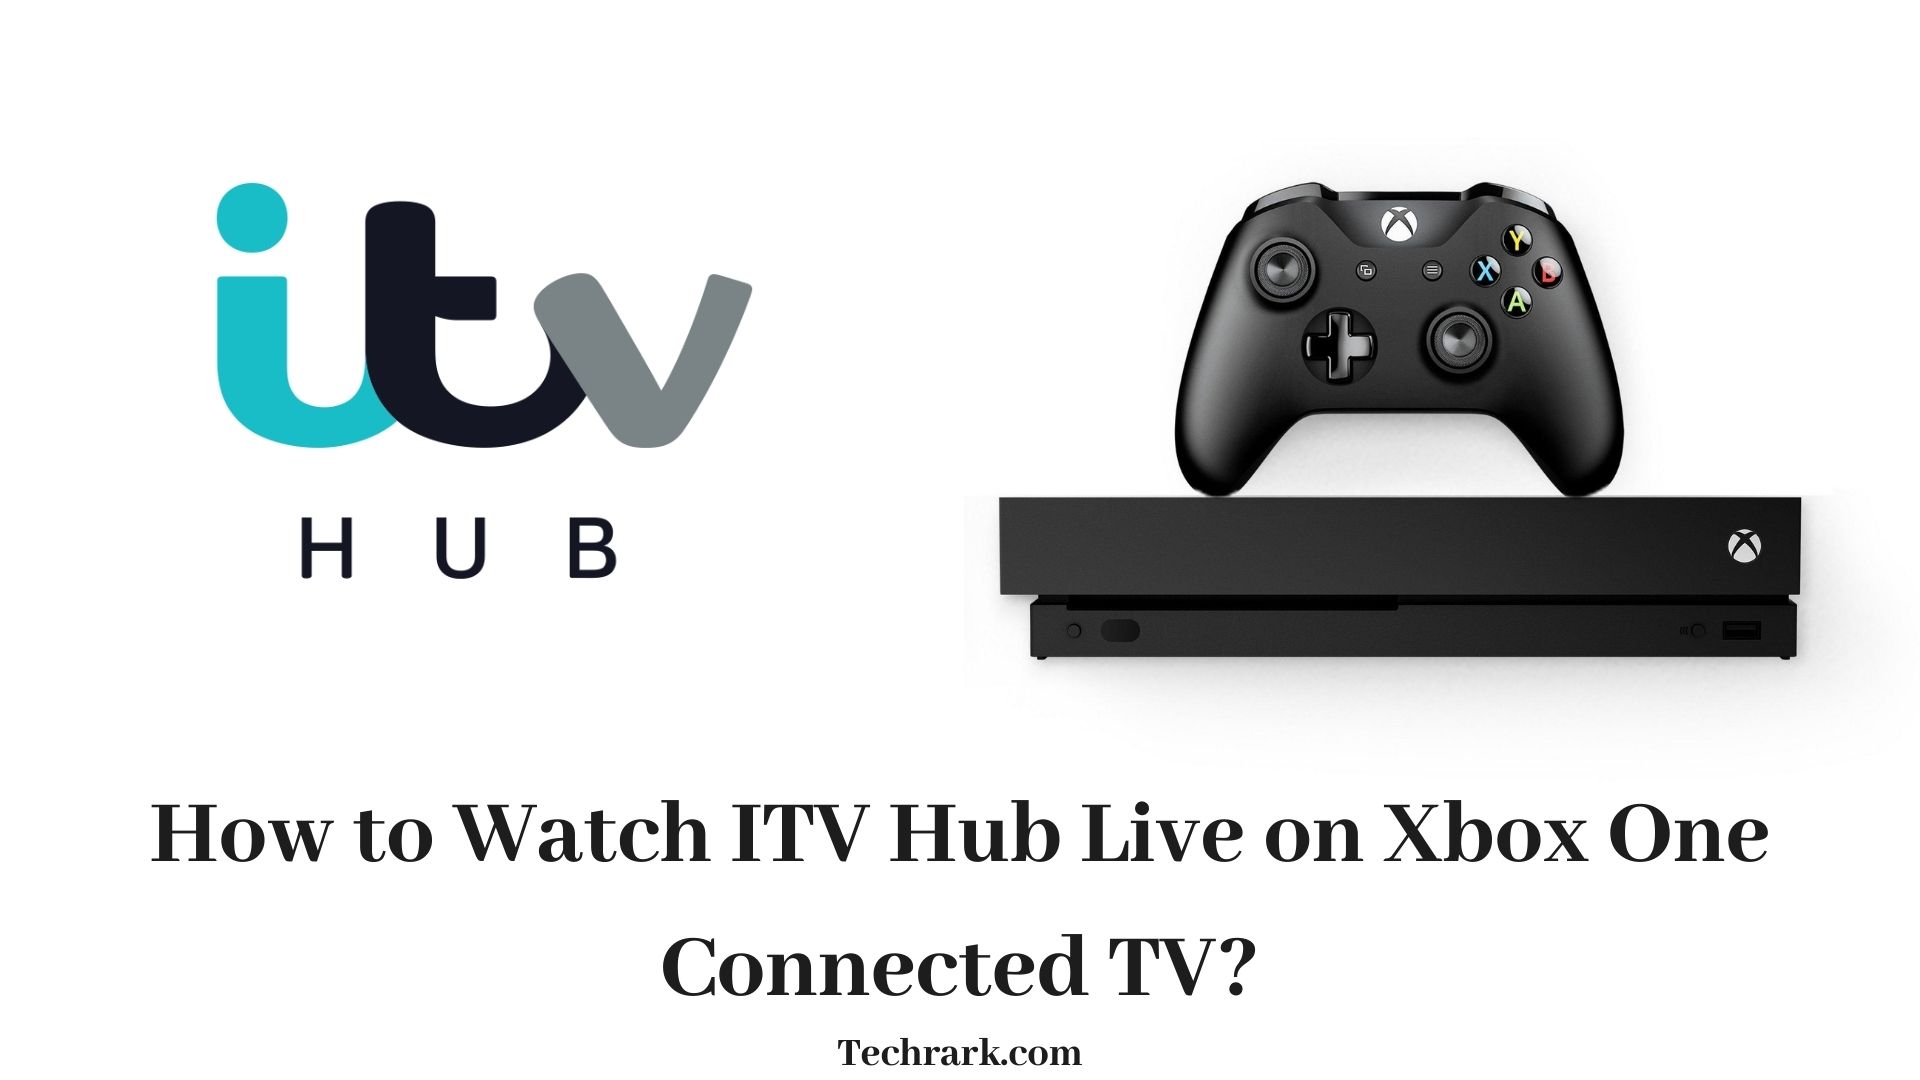 ITV Hub on Xbox One